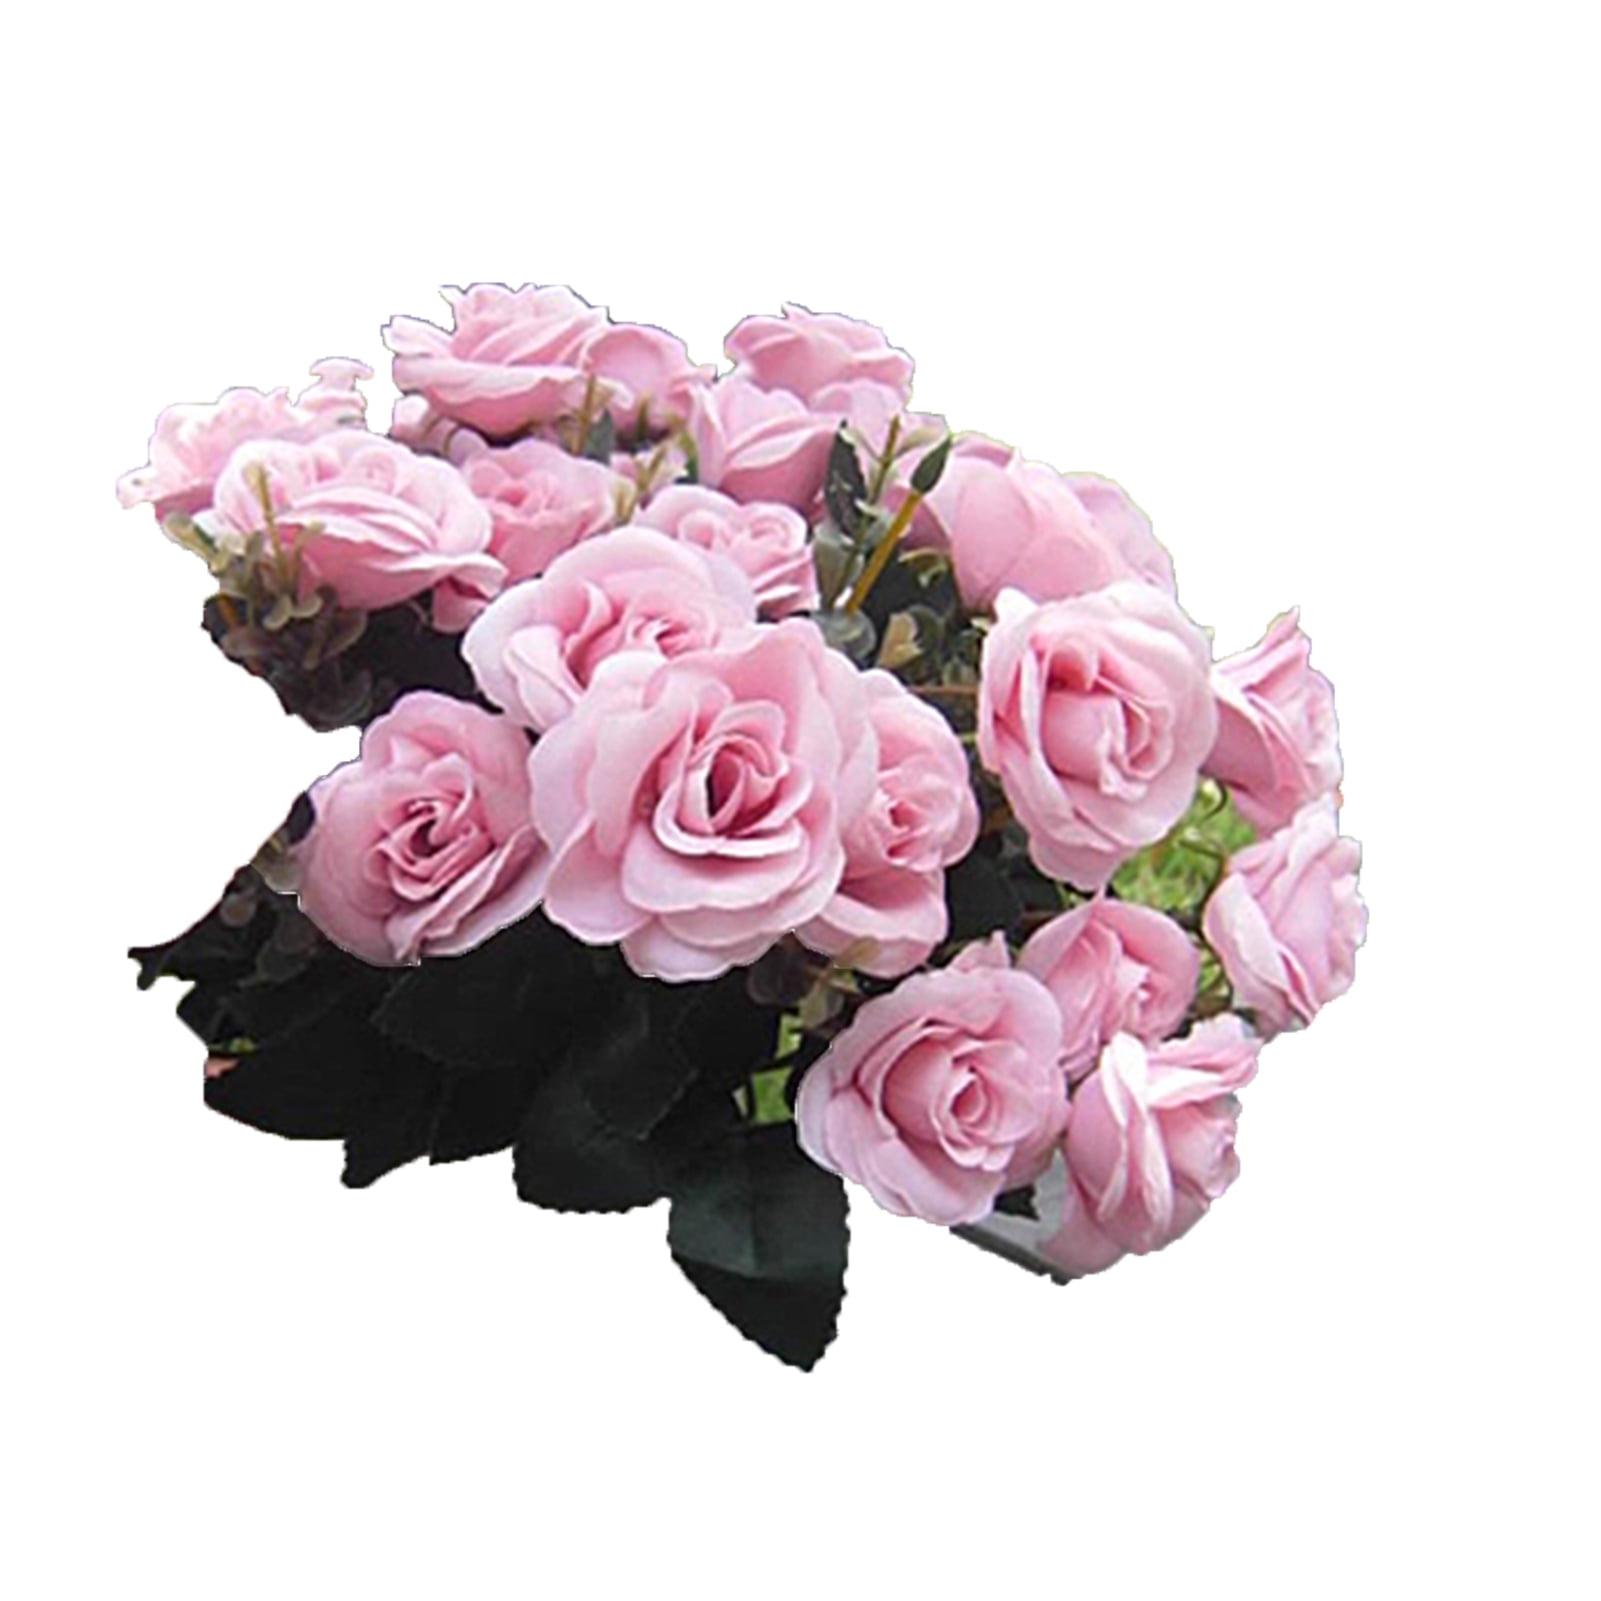 Details about   50PCS Artificial Silk Fake Rose Flower Wedding Bridal Bouquet Party Home Garden 